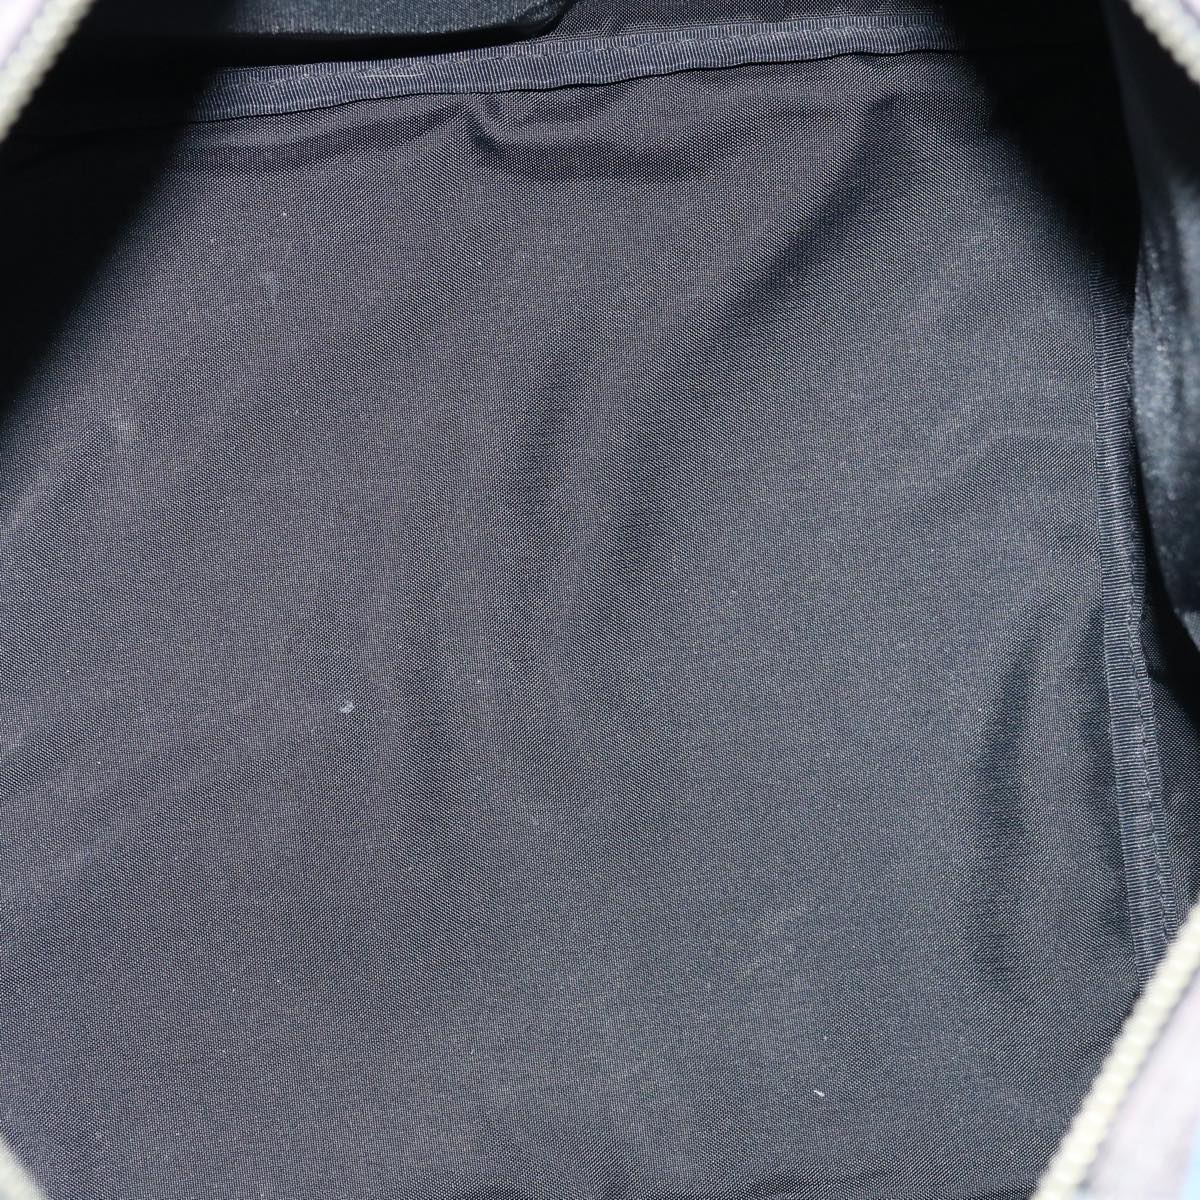 Burberrys Blue Label Hand Bag Nylon Navy Auth bs12309